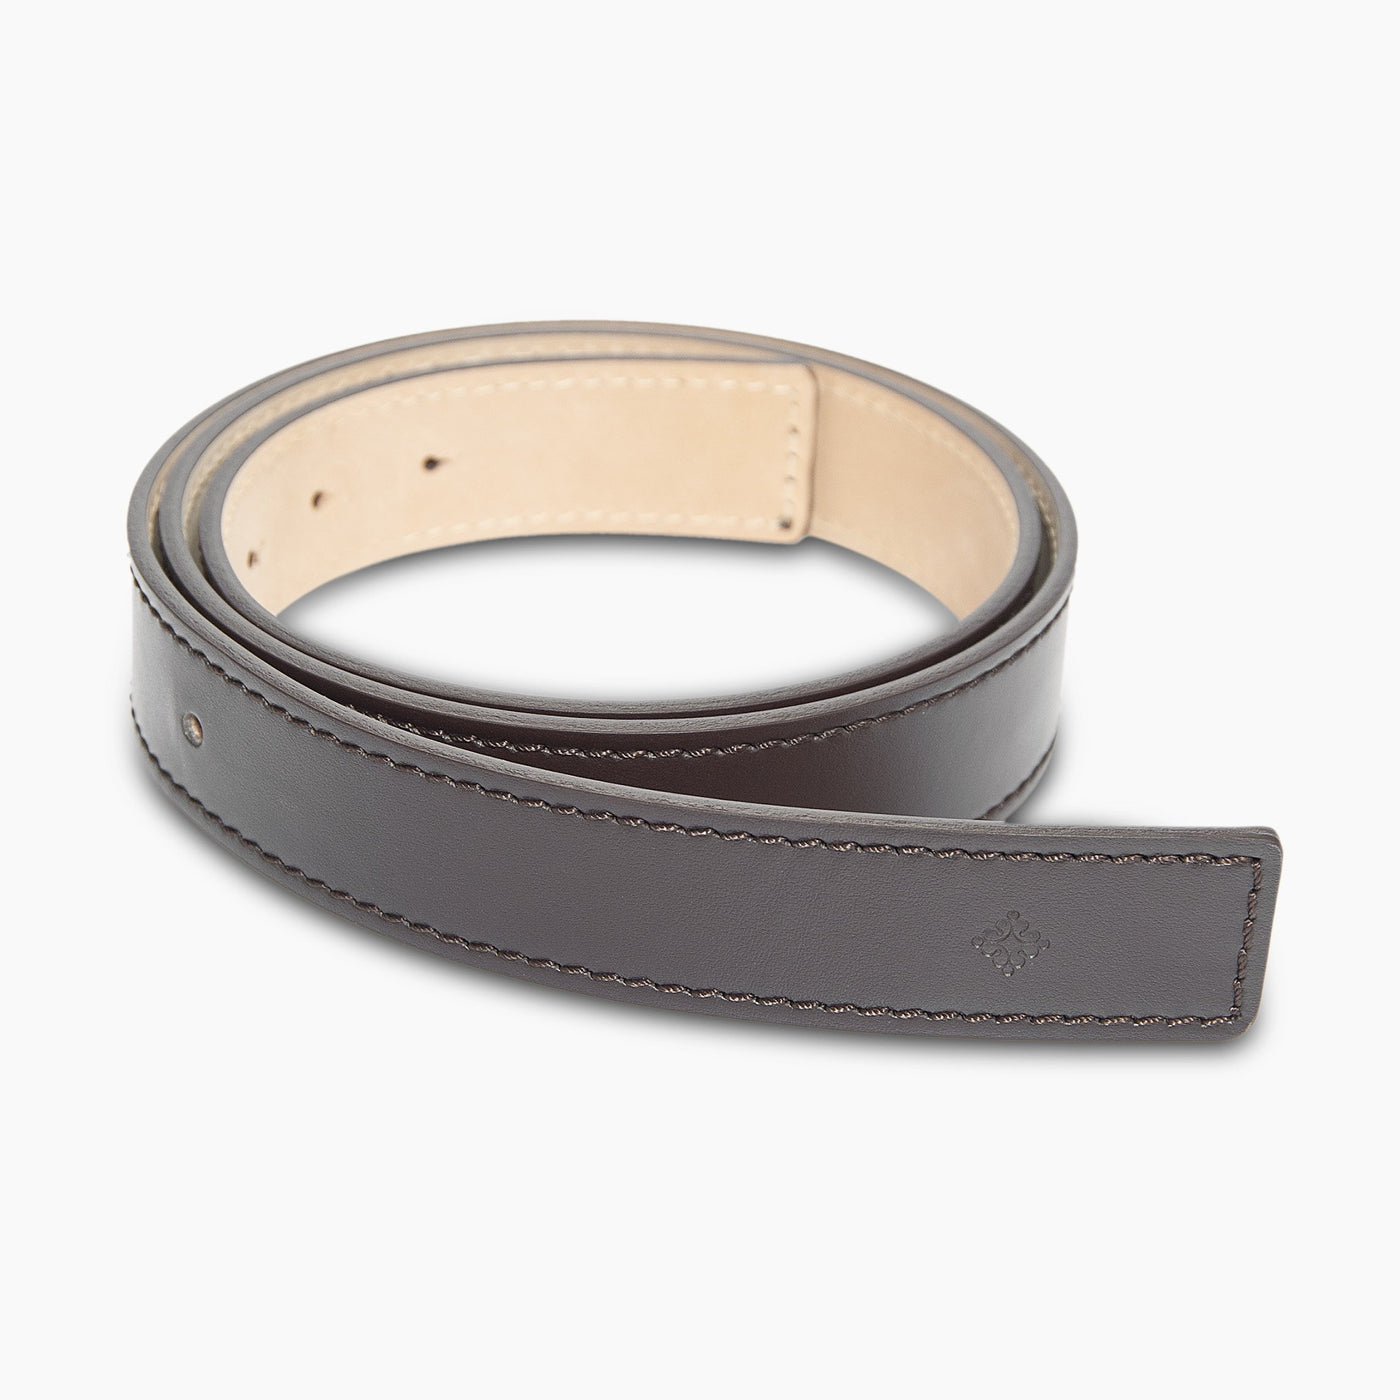 K Logo belt buckle and strap (cuoio fiorentino) *